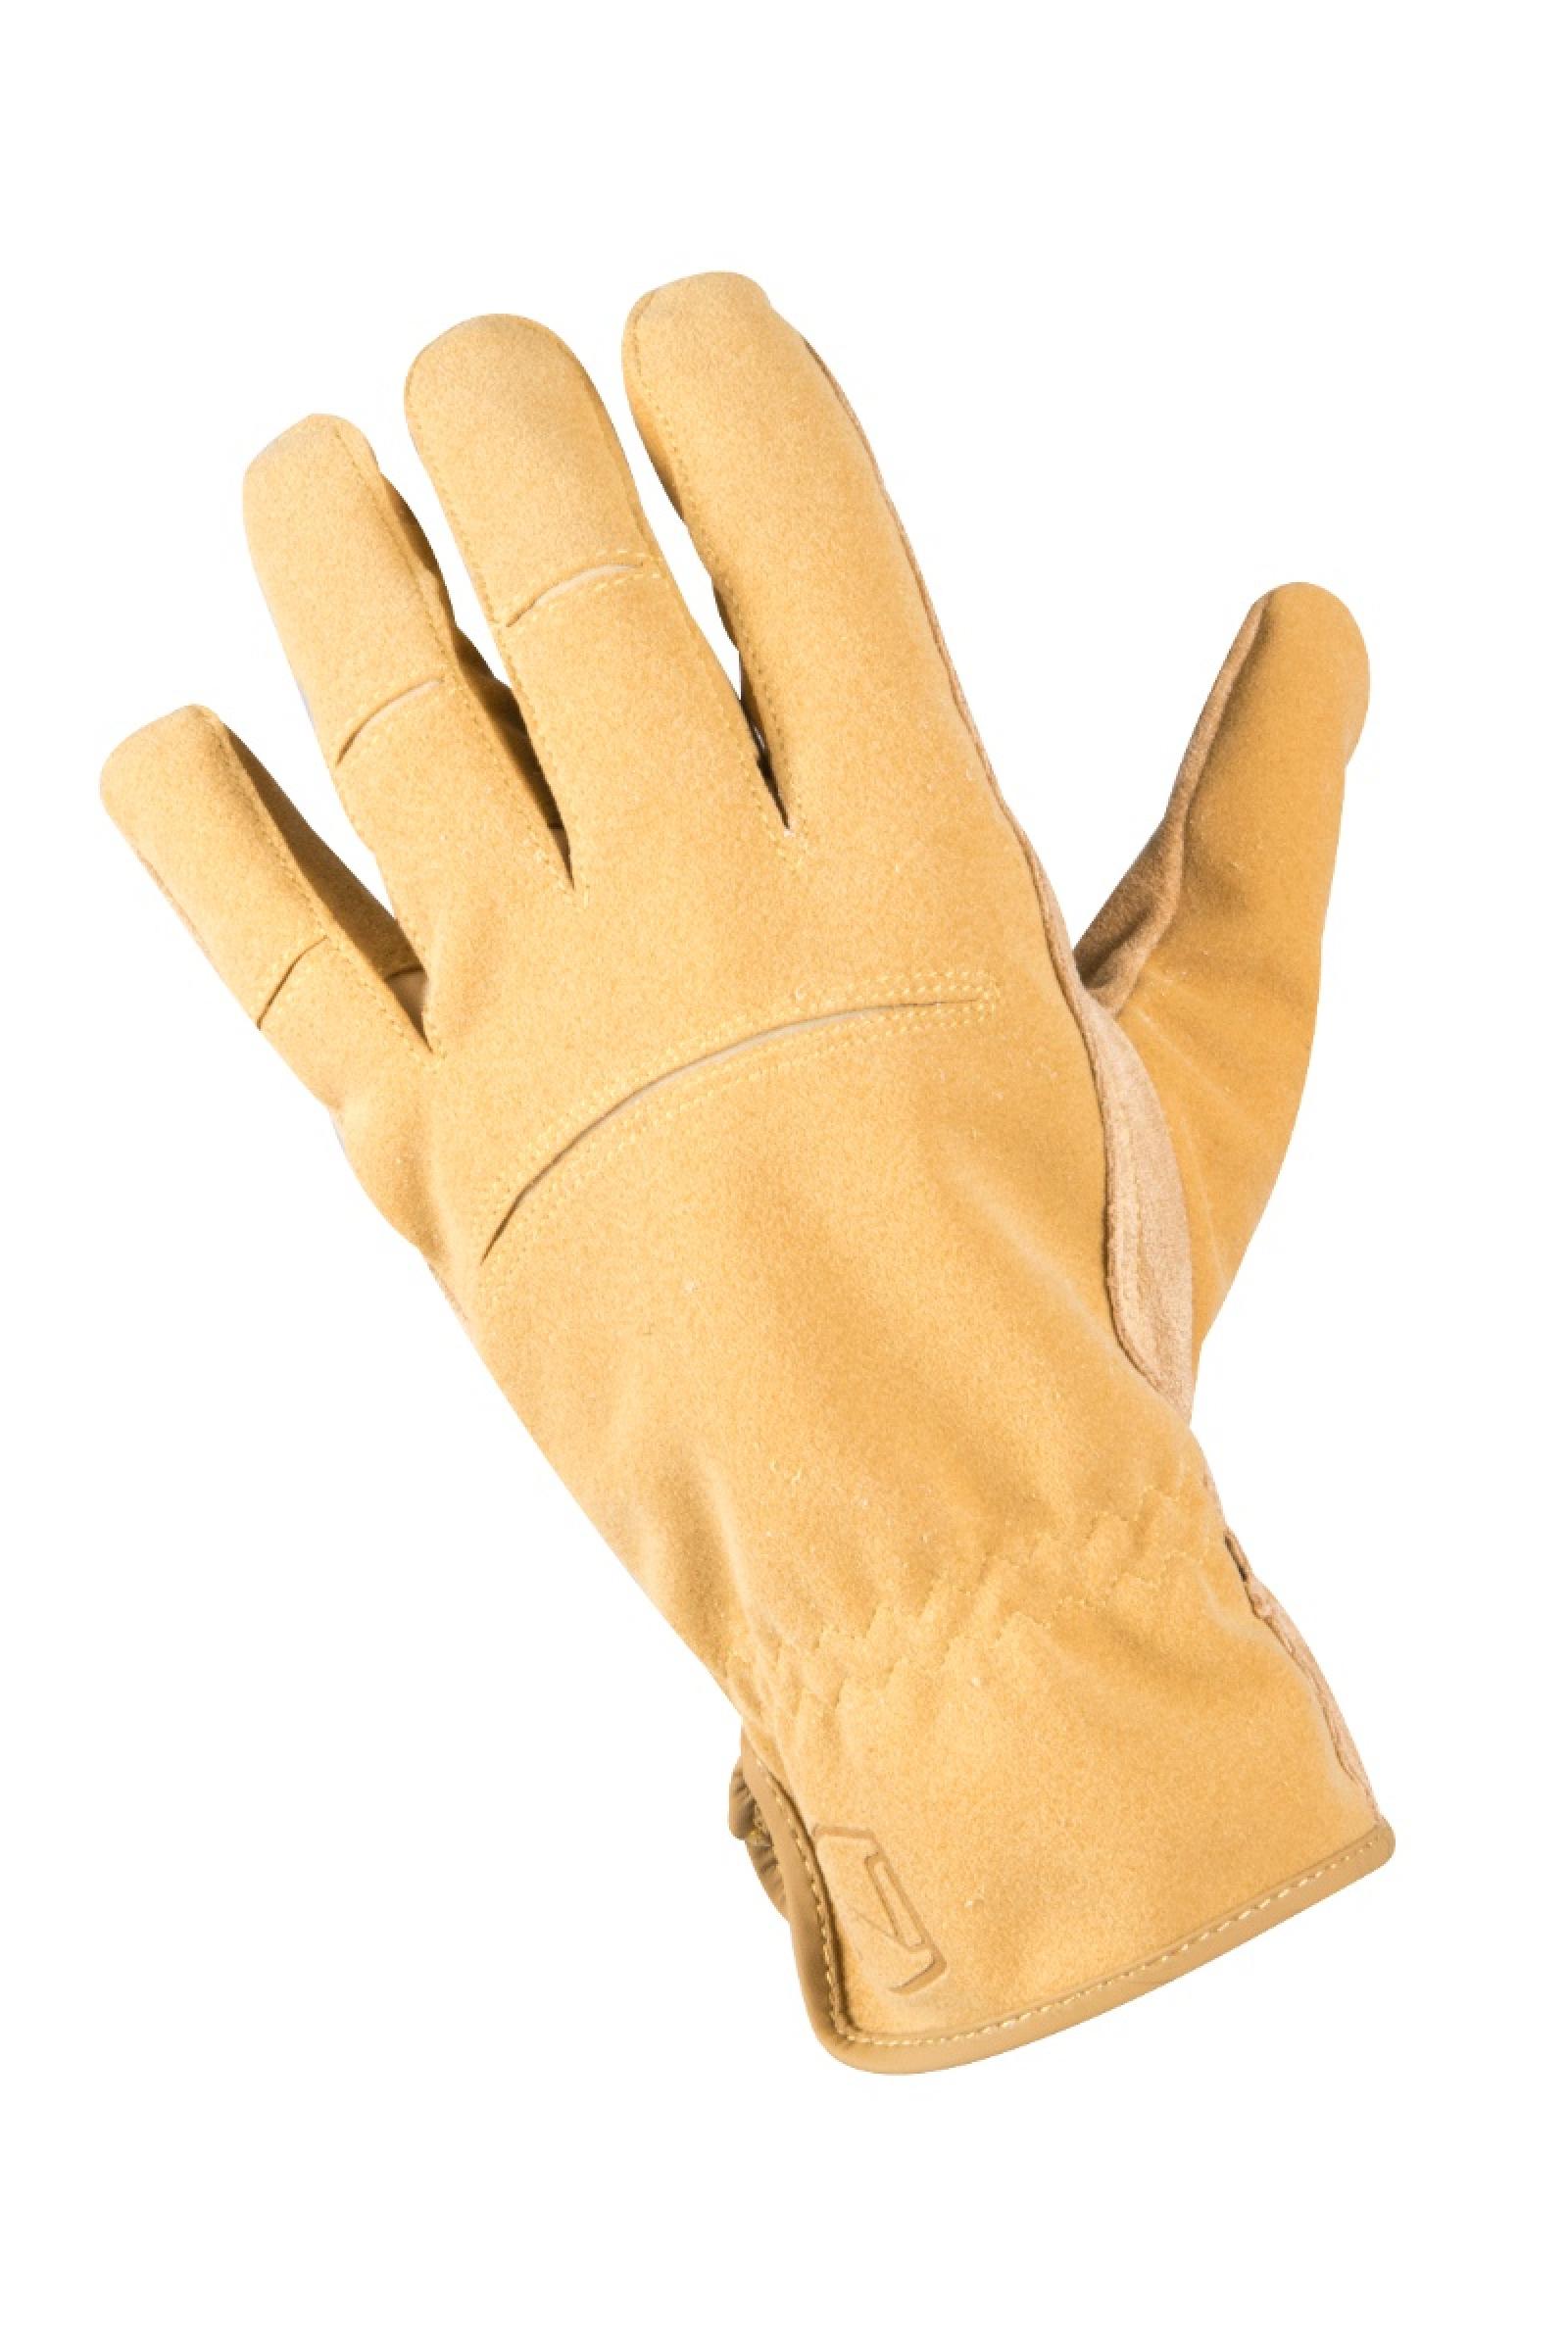 Noble Outfitters Men's Dakota Work Glove